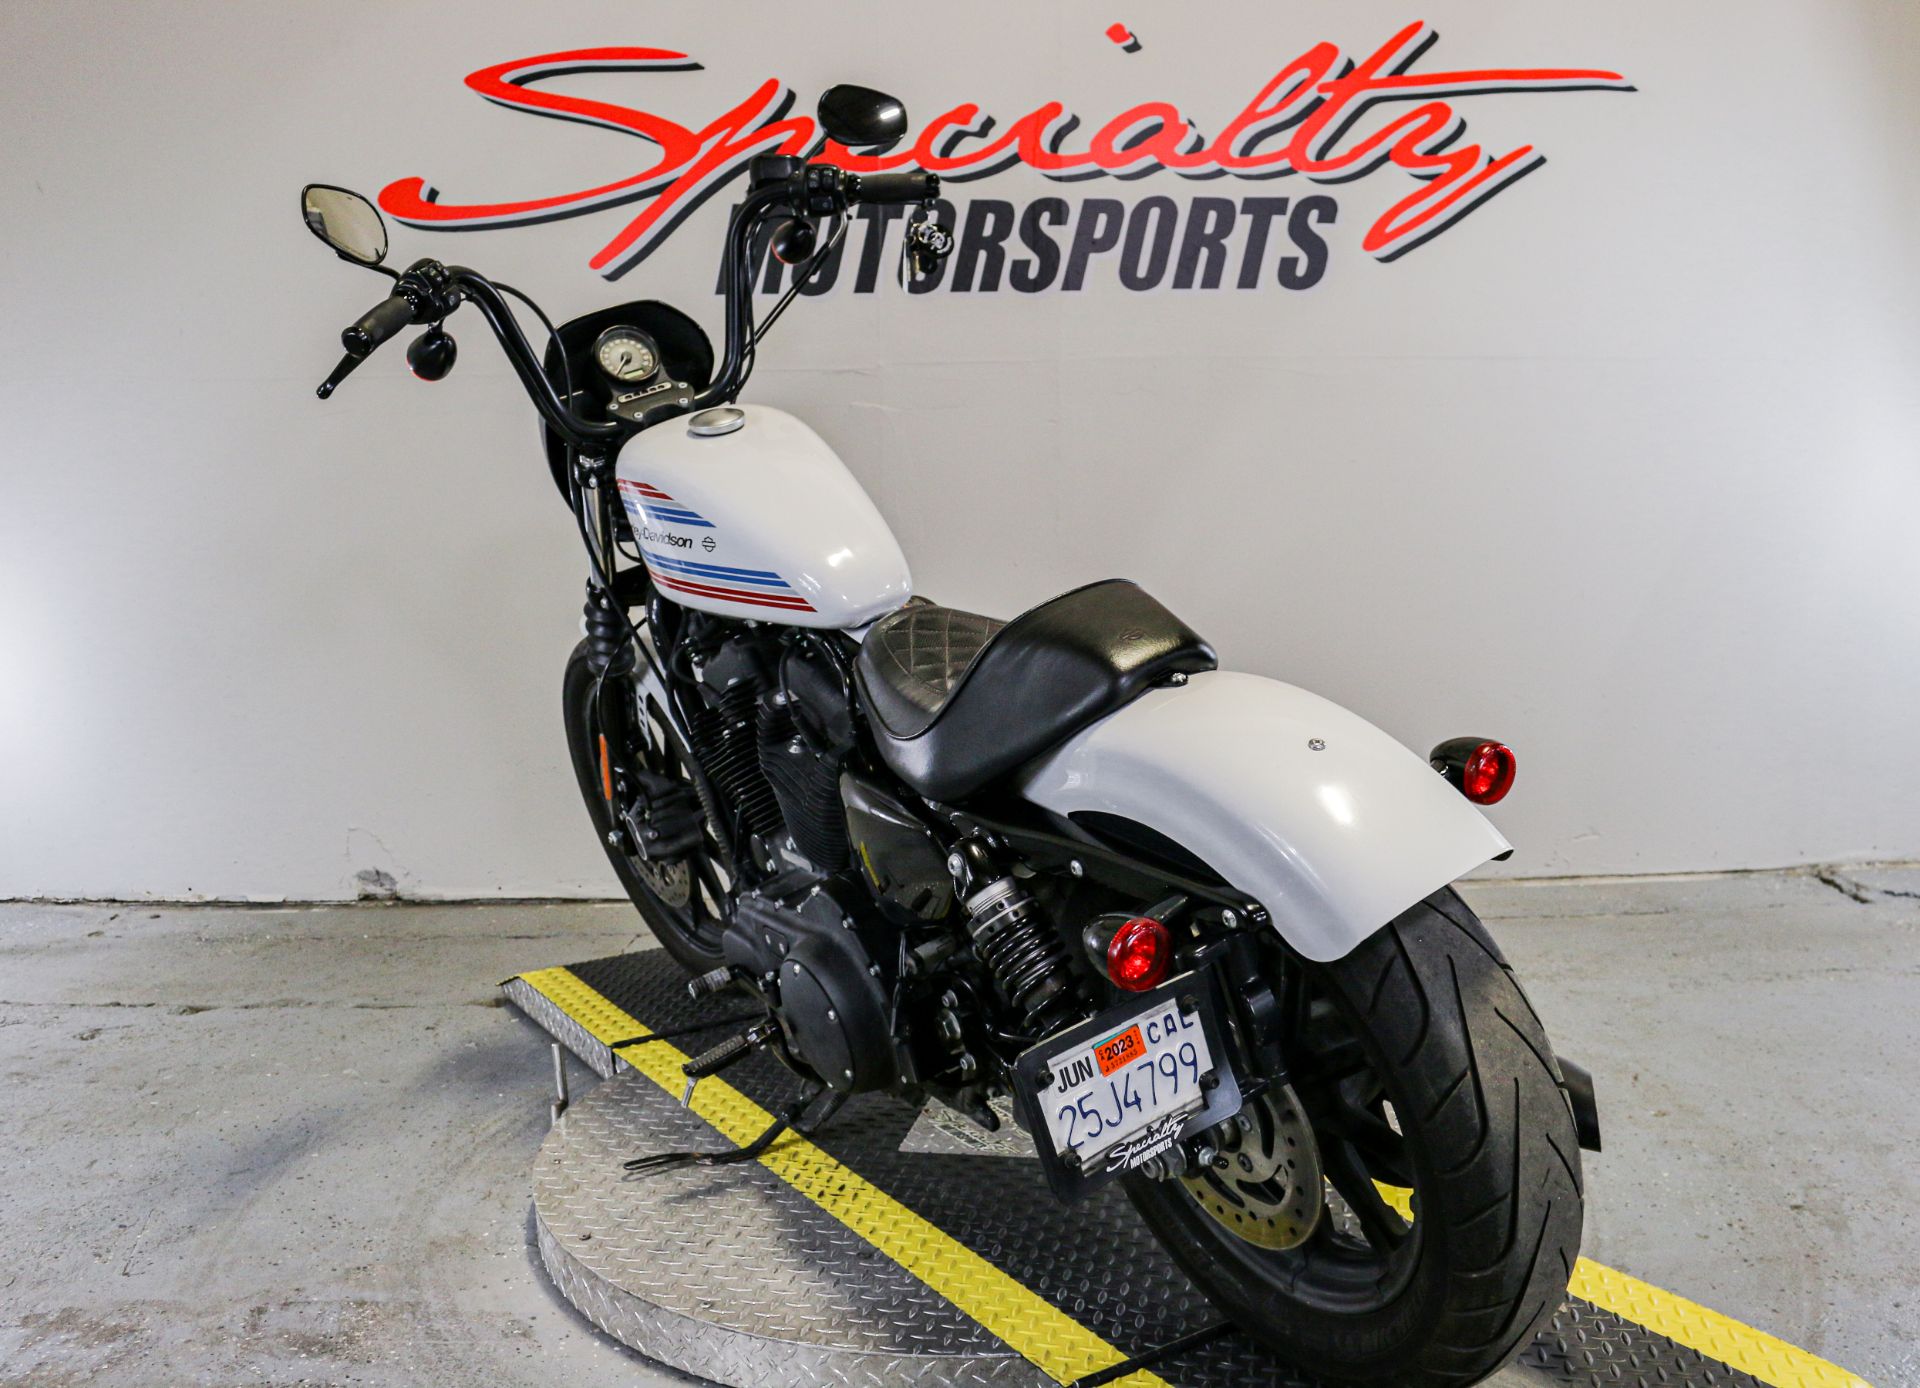 2021 Harley-Davidson Iron 1200™ in Sacramento, California - Photo 3